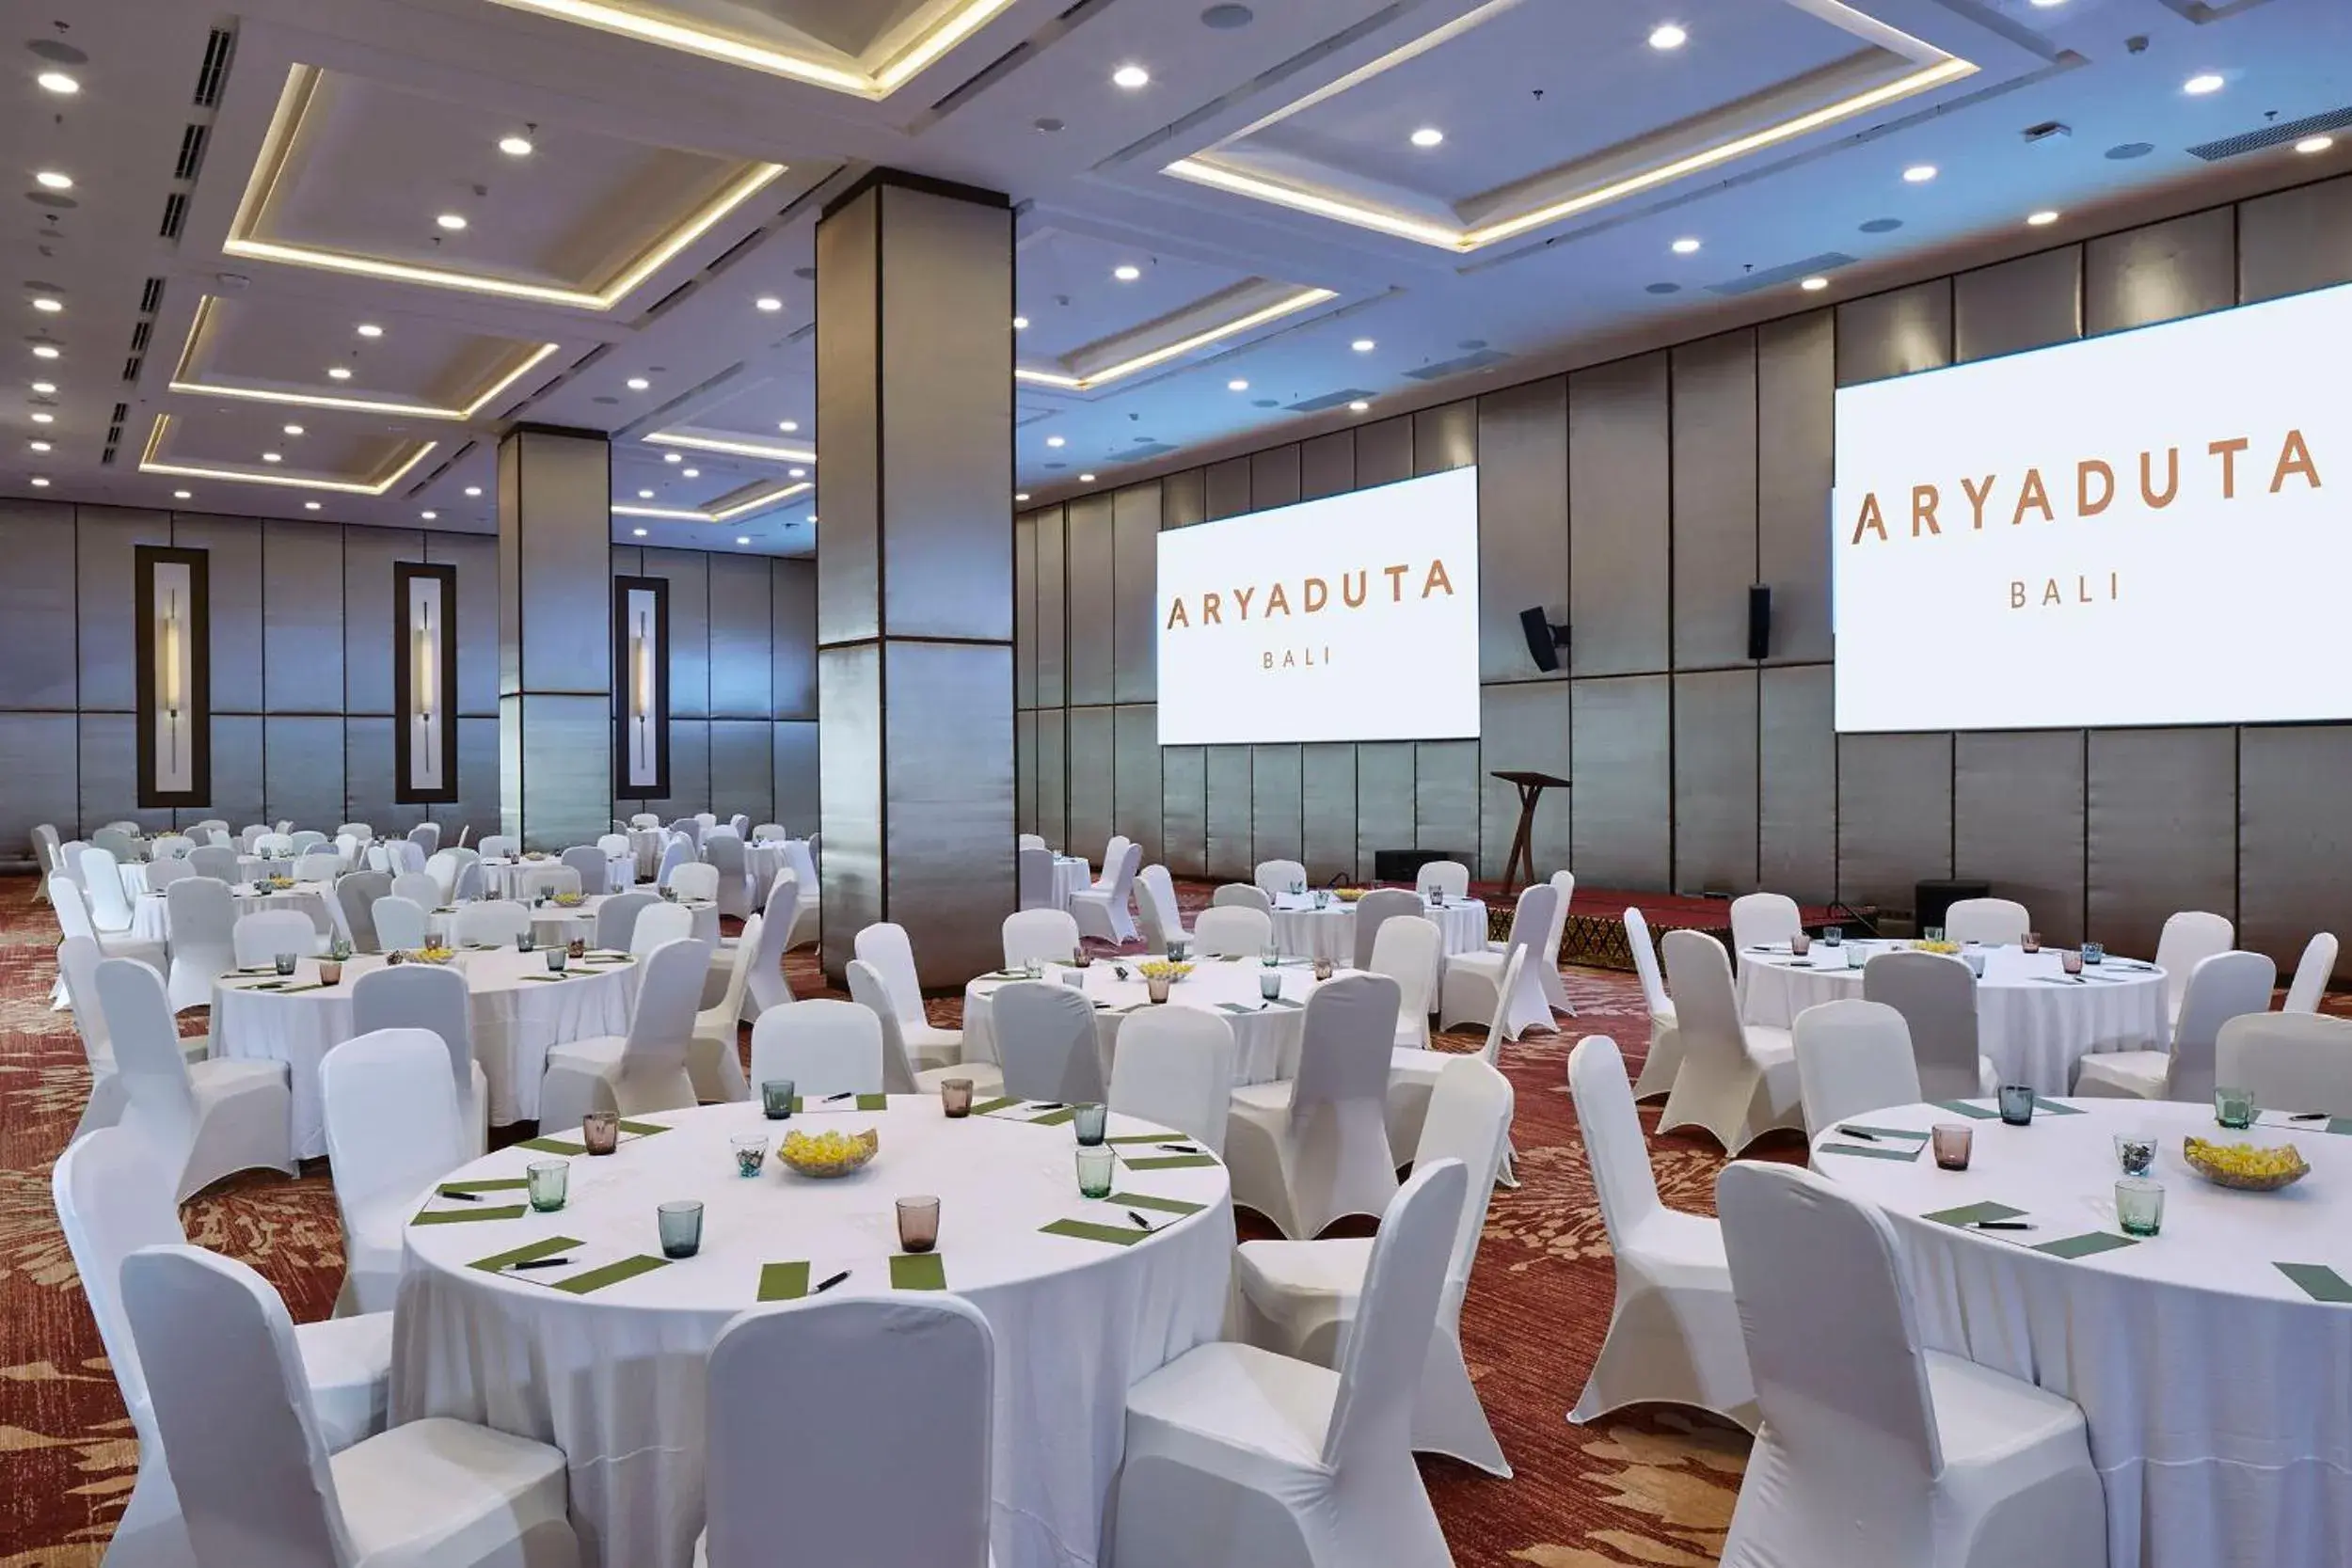 Banquet/Function facilities, Banquet Facilities in Aryaduta Bali